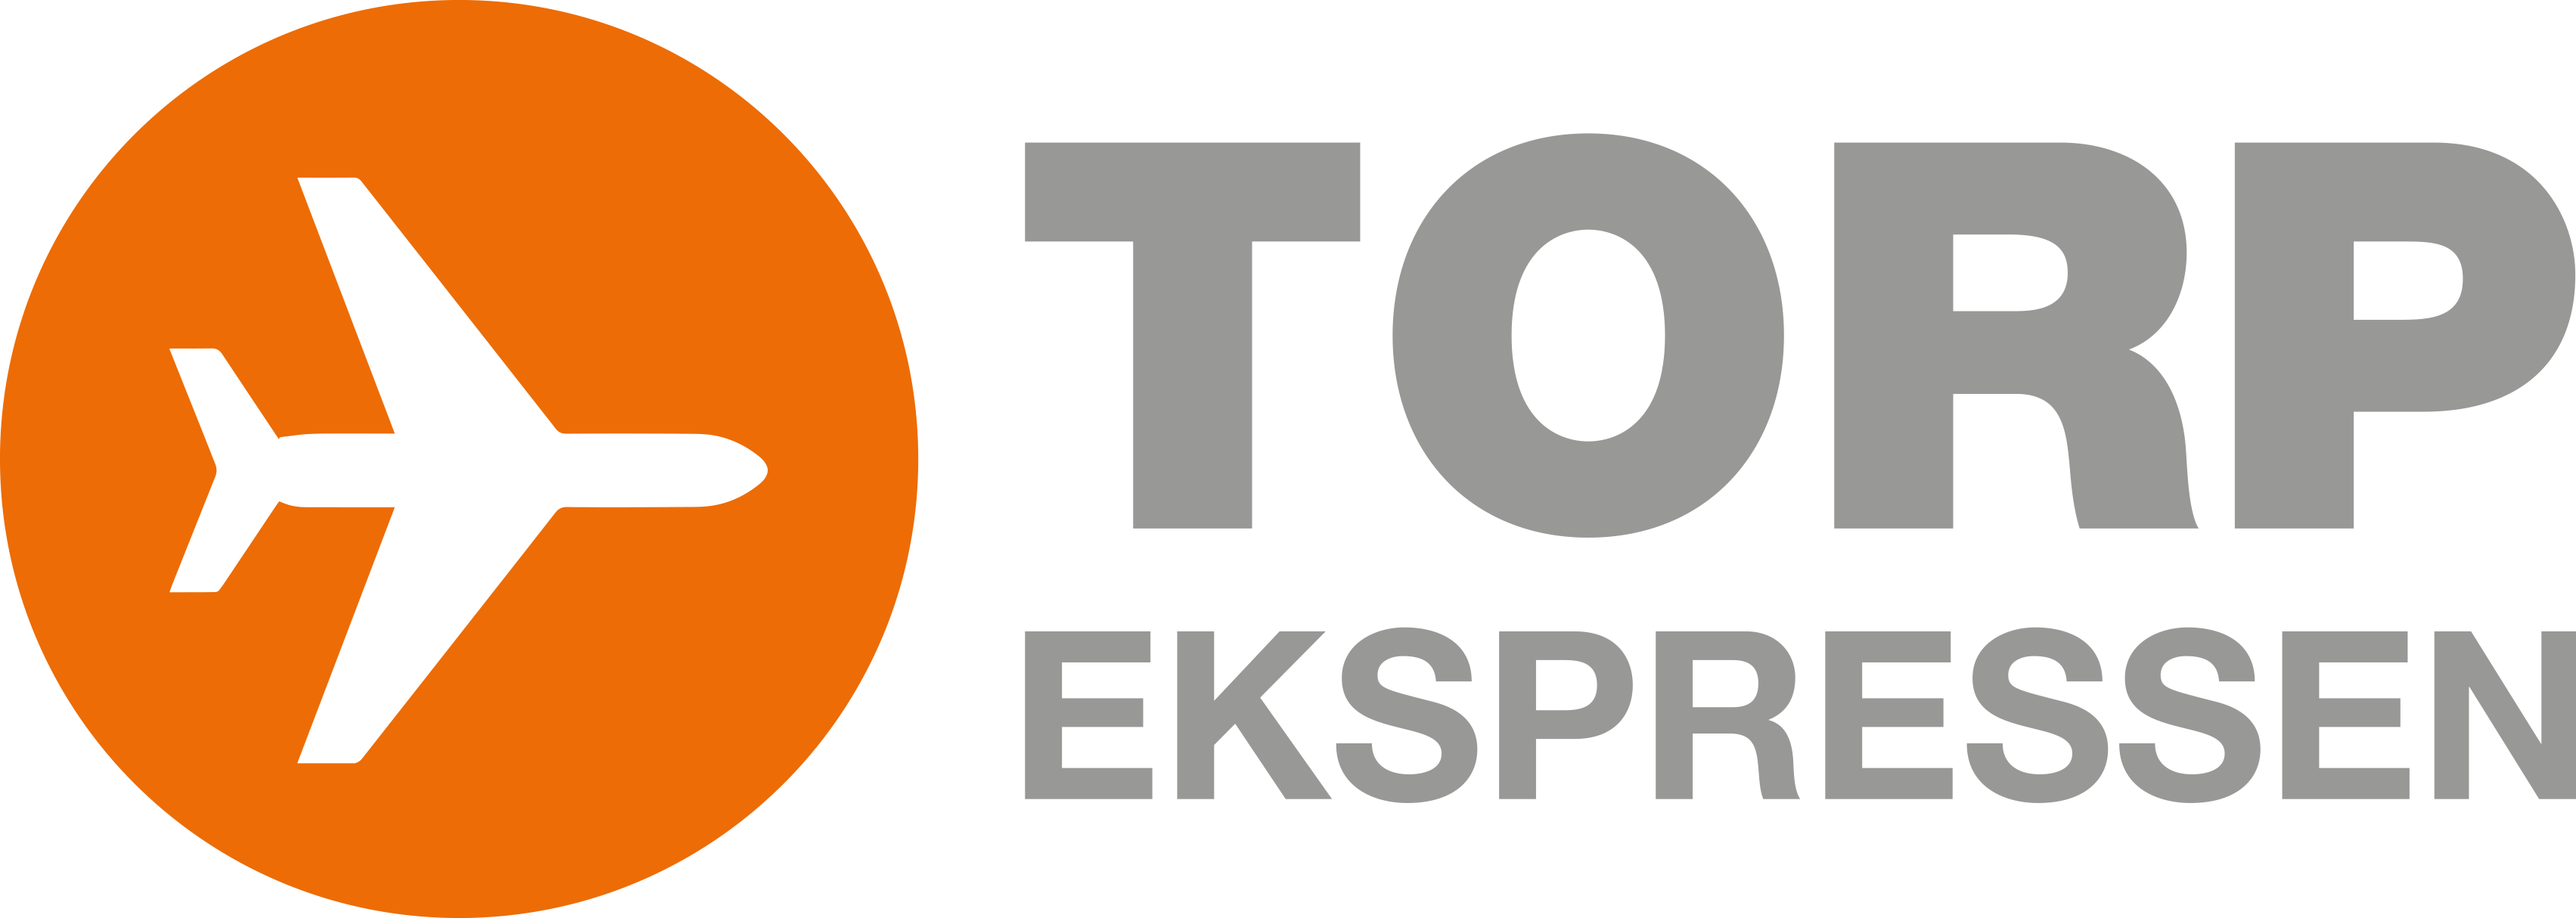 Lavprisekspressen logo